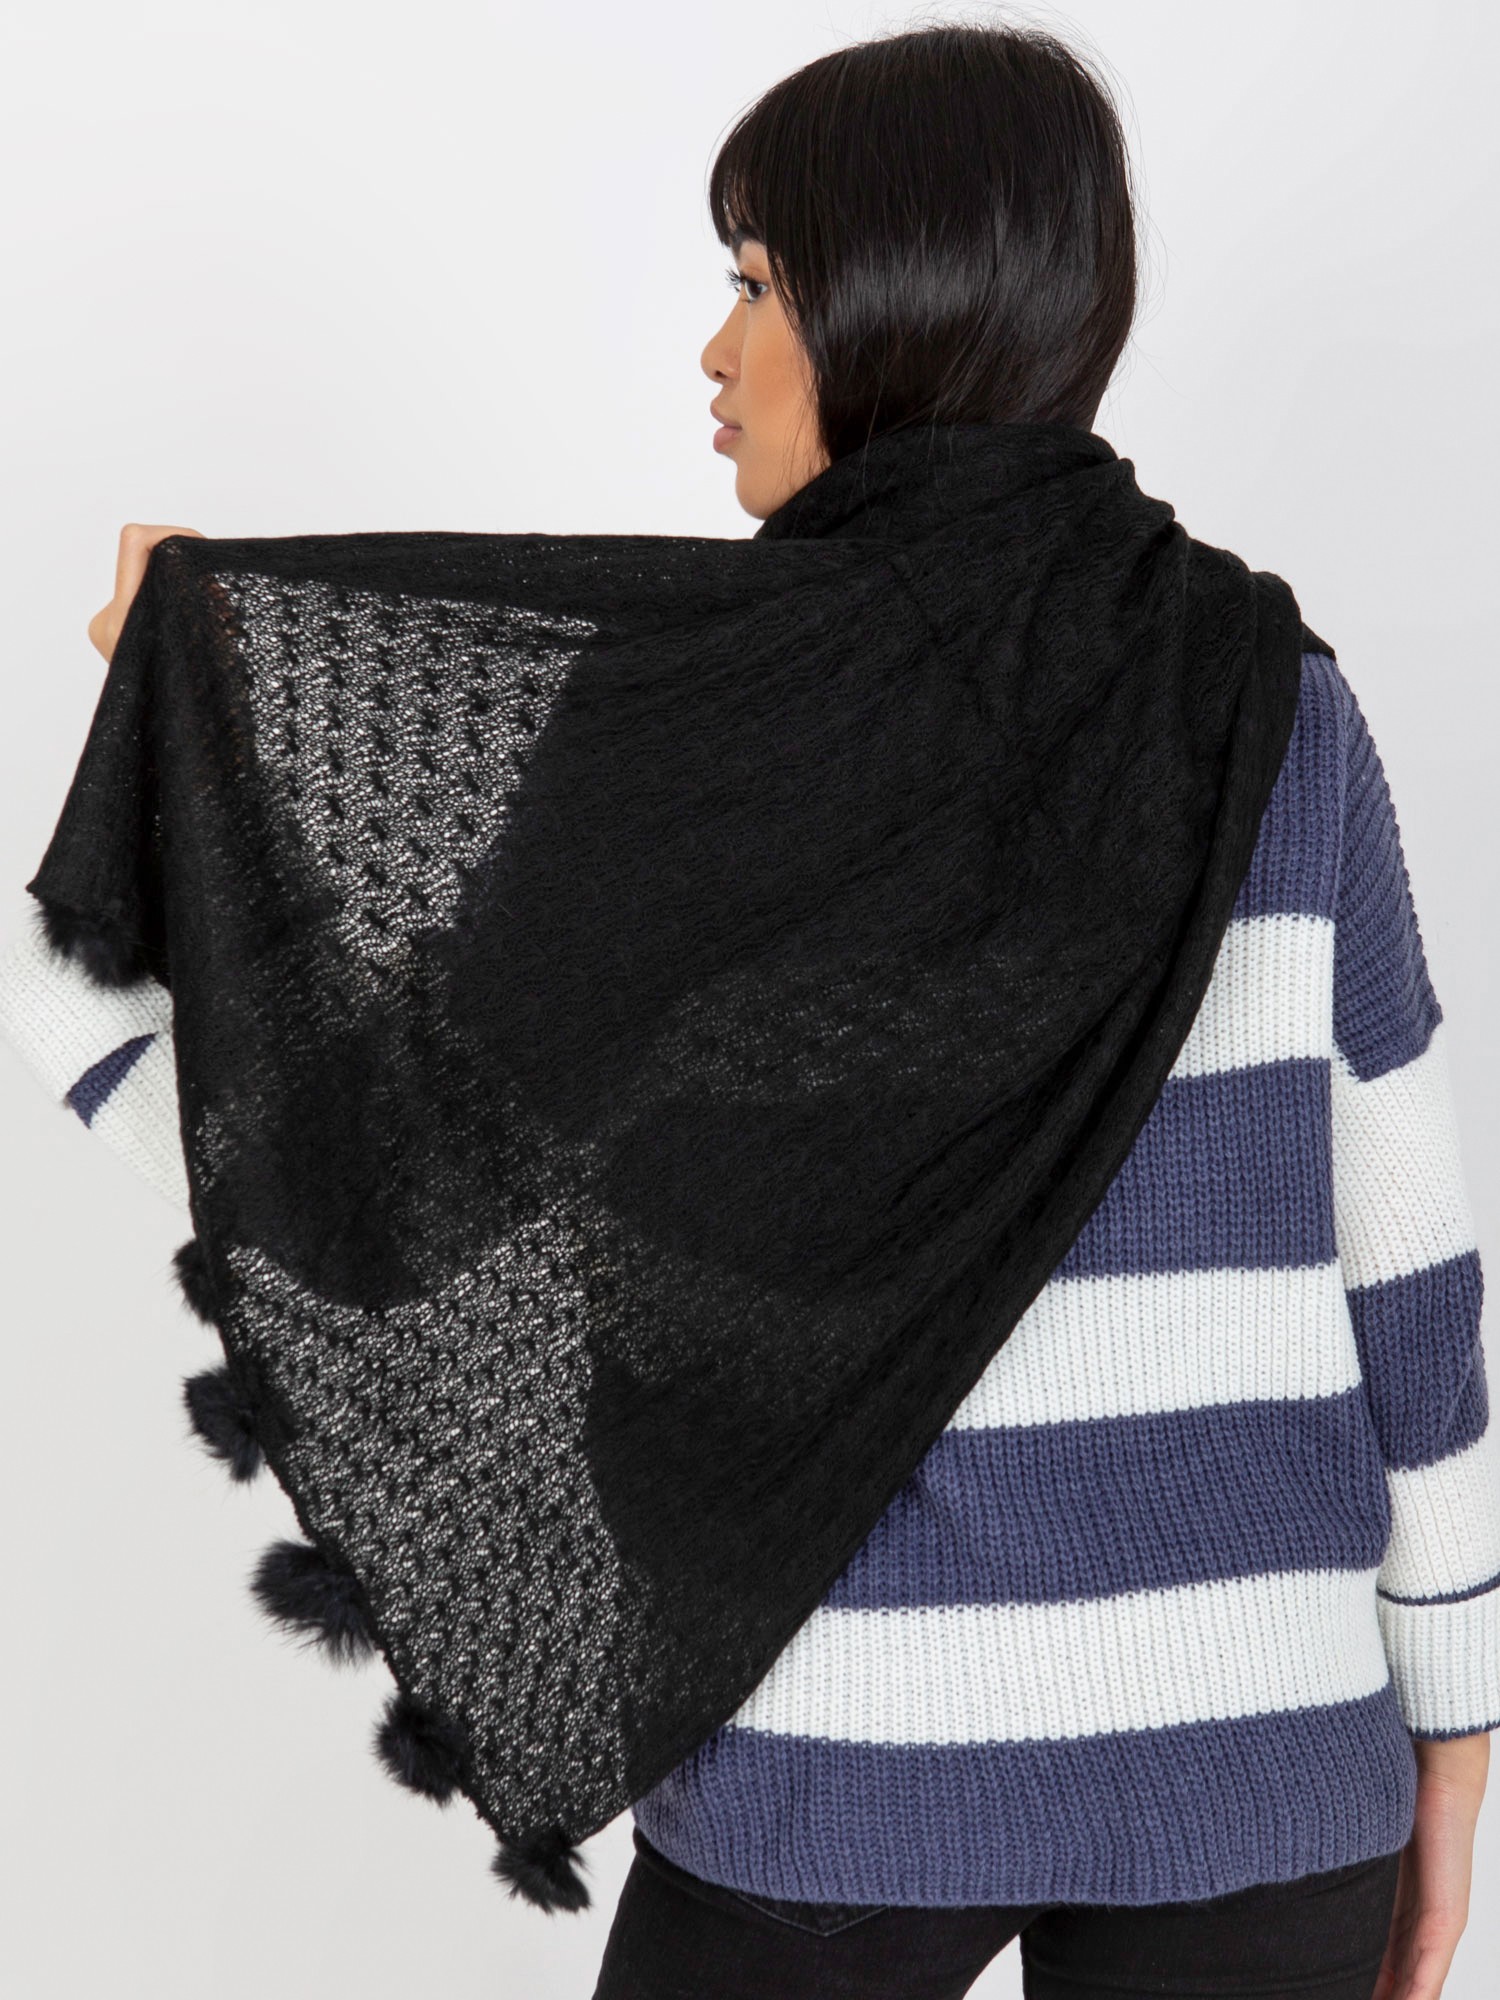 Black women's scarf with openwork pattern